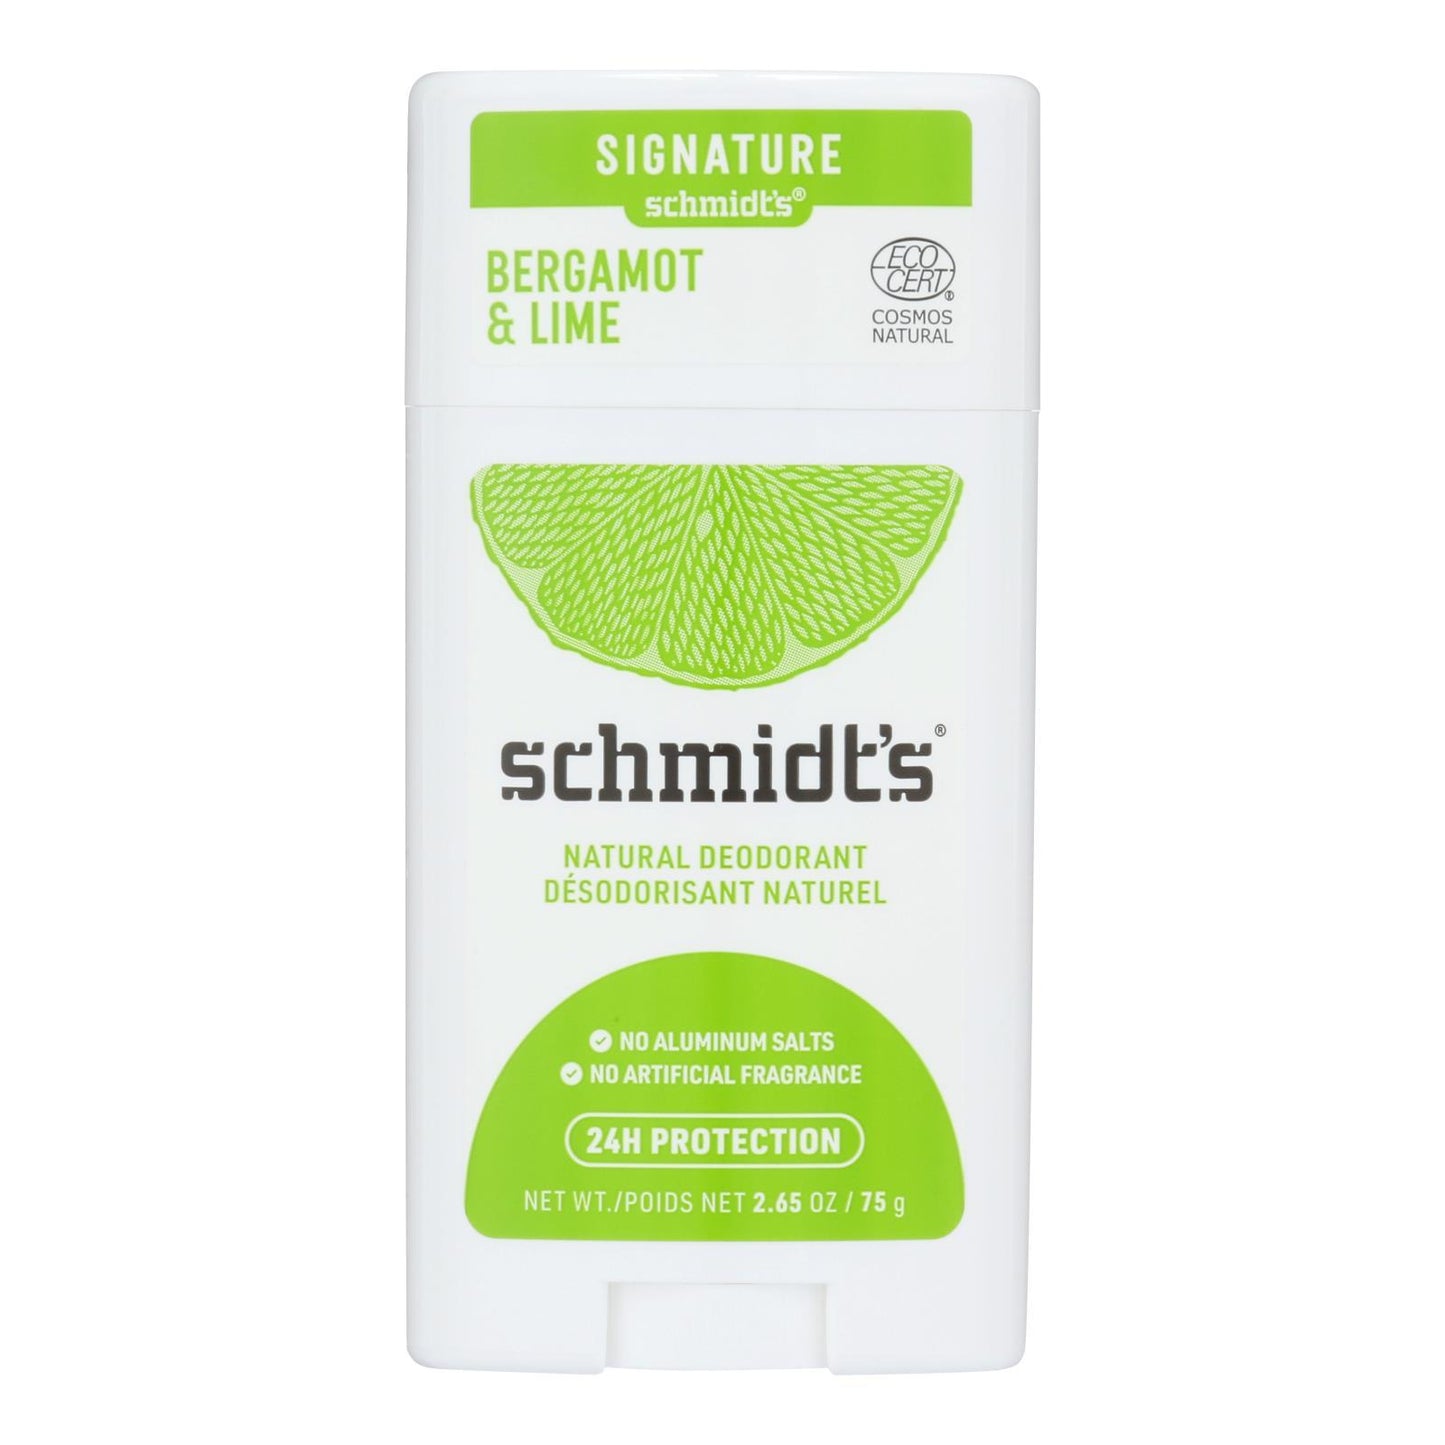 Schmidt's - Deodorant Brgmnt&lme Stk - 1 Each - 2.65 Oz